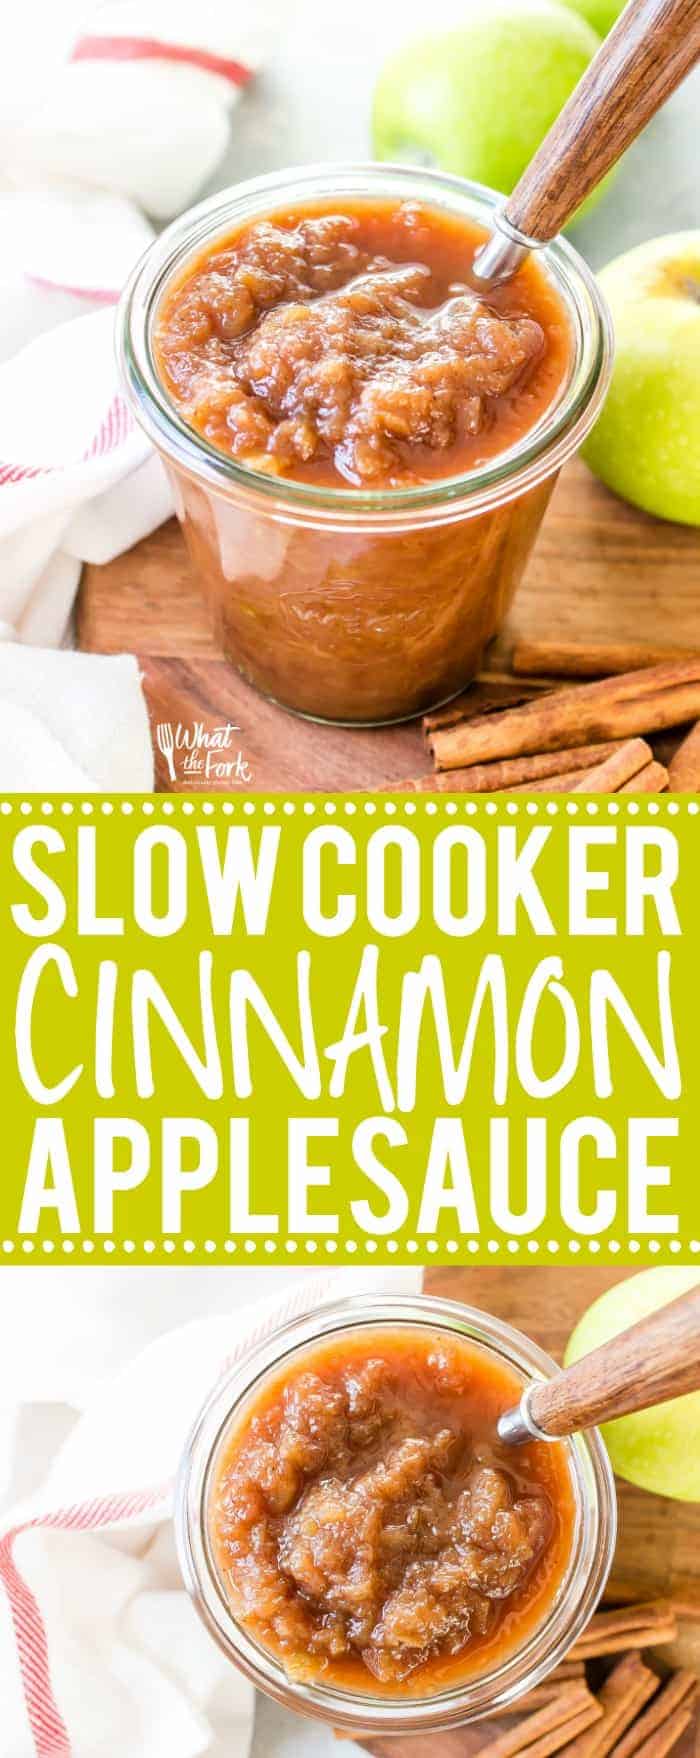 The Best Slow Cooker Cinnamon Applesauce from What The Fork Food Blog | @whattheforkblog | whattheforkfoodblog.com | homemade applesauce | crock pot applesauce | how to make applesauce in a slow cooker | how to make applesauce in a crock pot | how to make applesauce | applesauce with cinnamon | applesauce recipe | recipe for applesauce | easy applesauce recipe